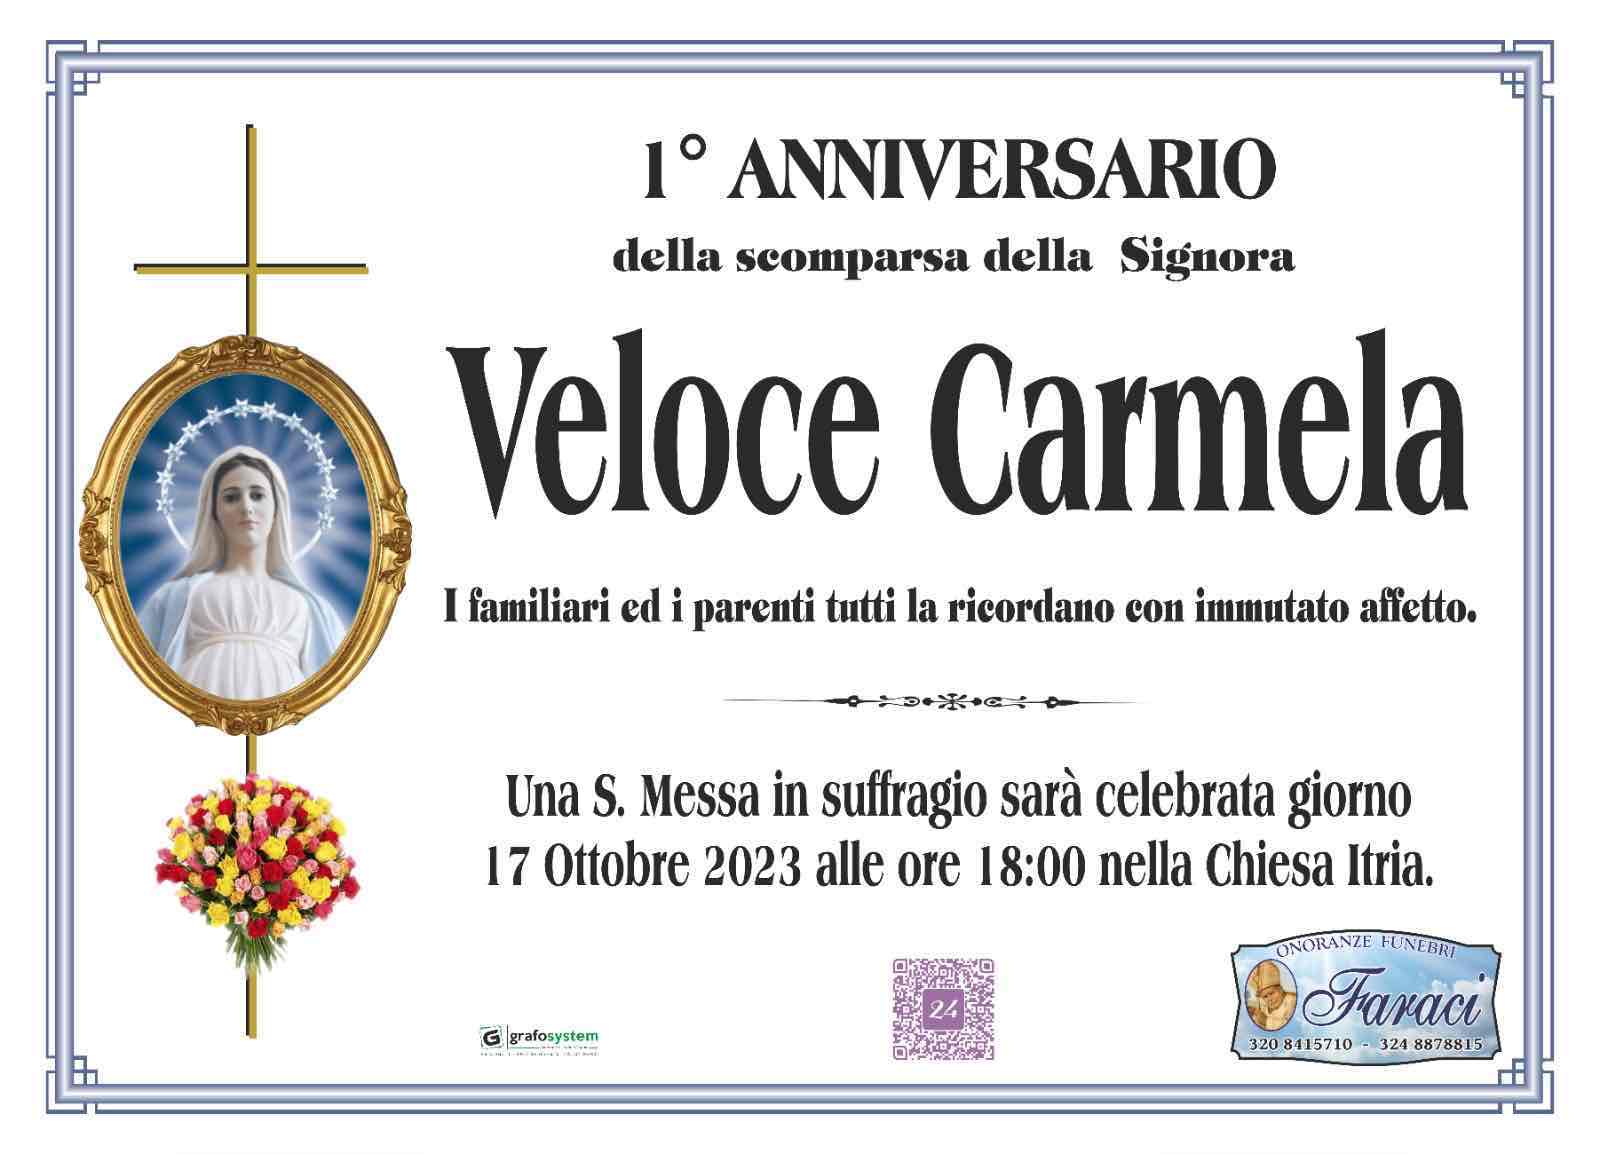 Carmela Veloce